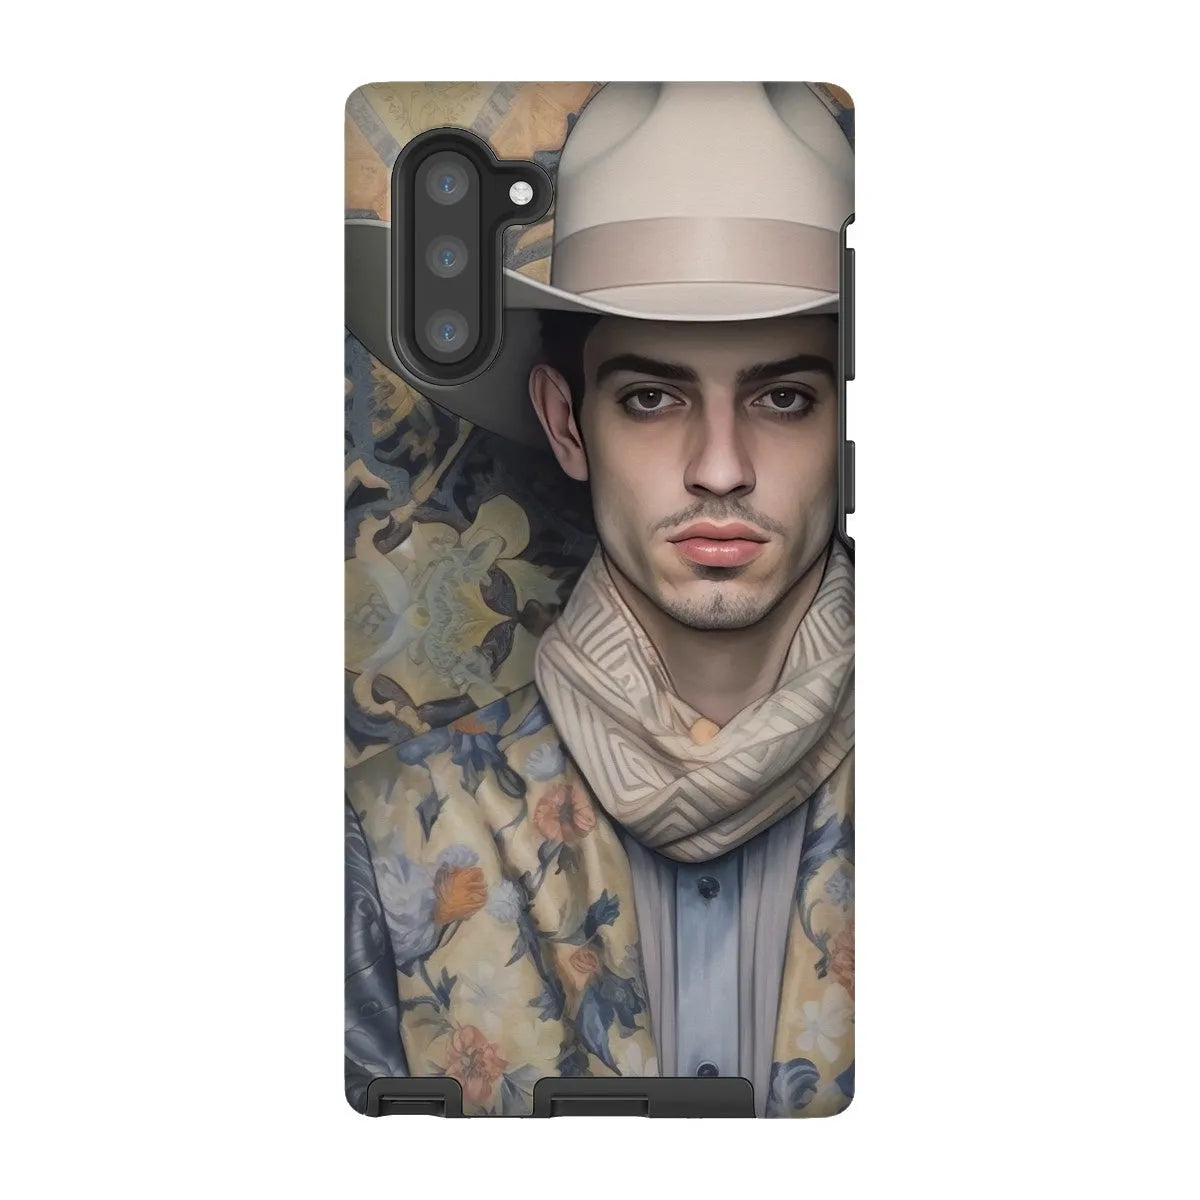 Farzad The Gay Cowboy - Dandy Gay Men Art Phone Case - Samsung Galaxy Note 10 / Matte - Mobile Phone Cases - Aesthetic